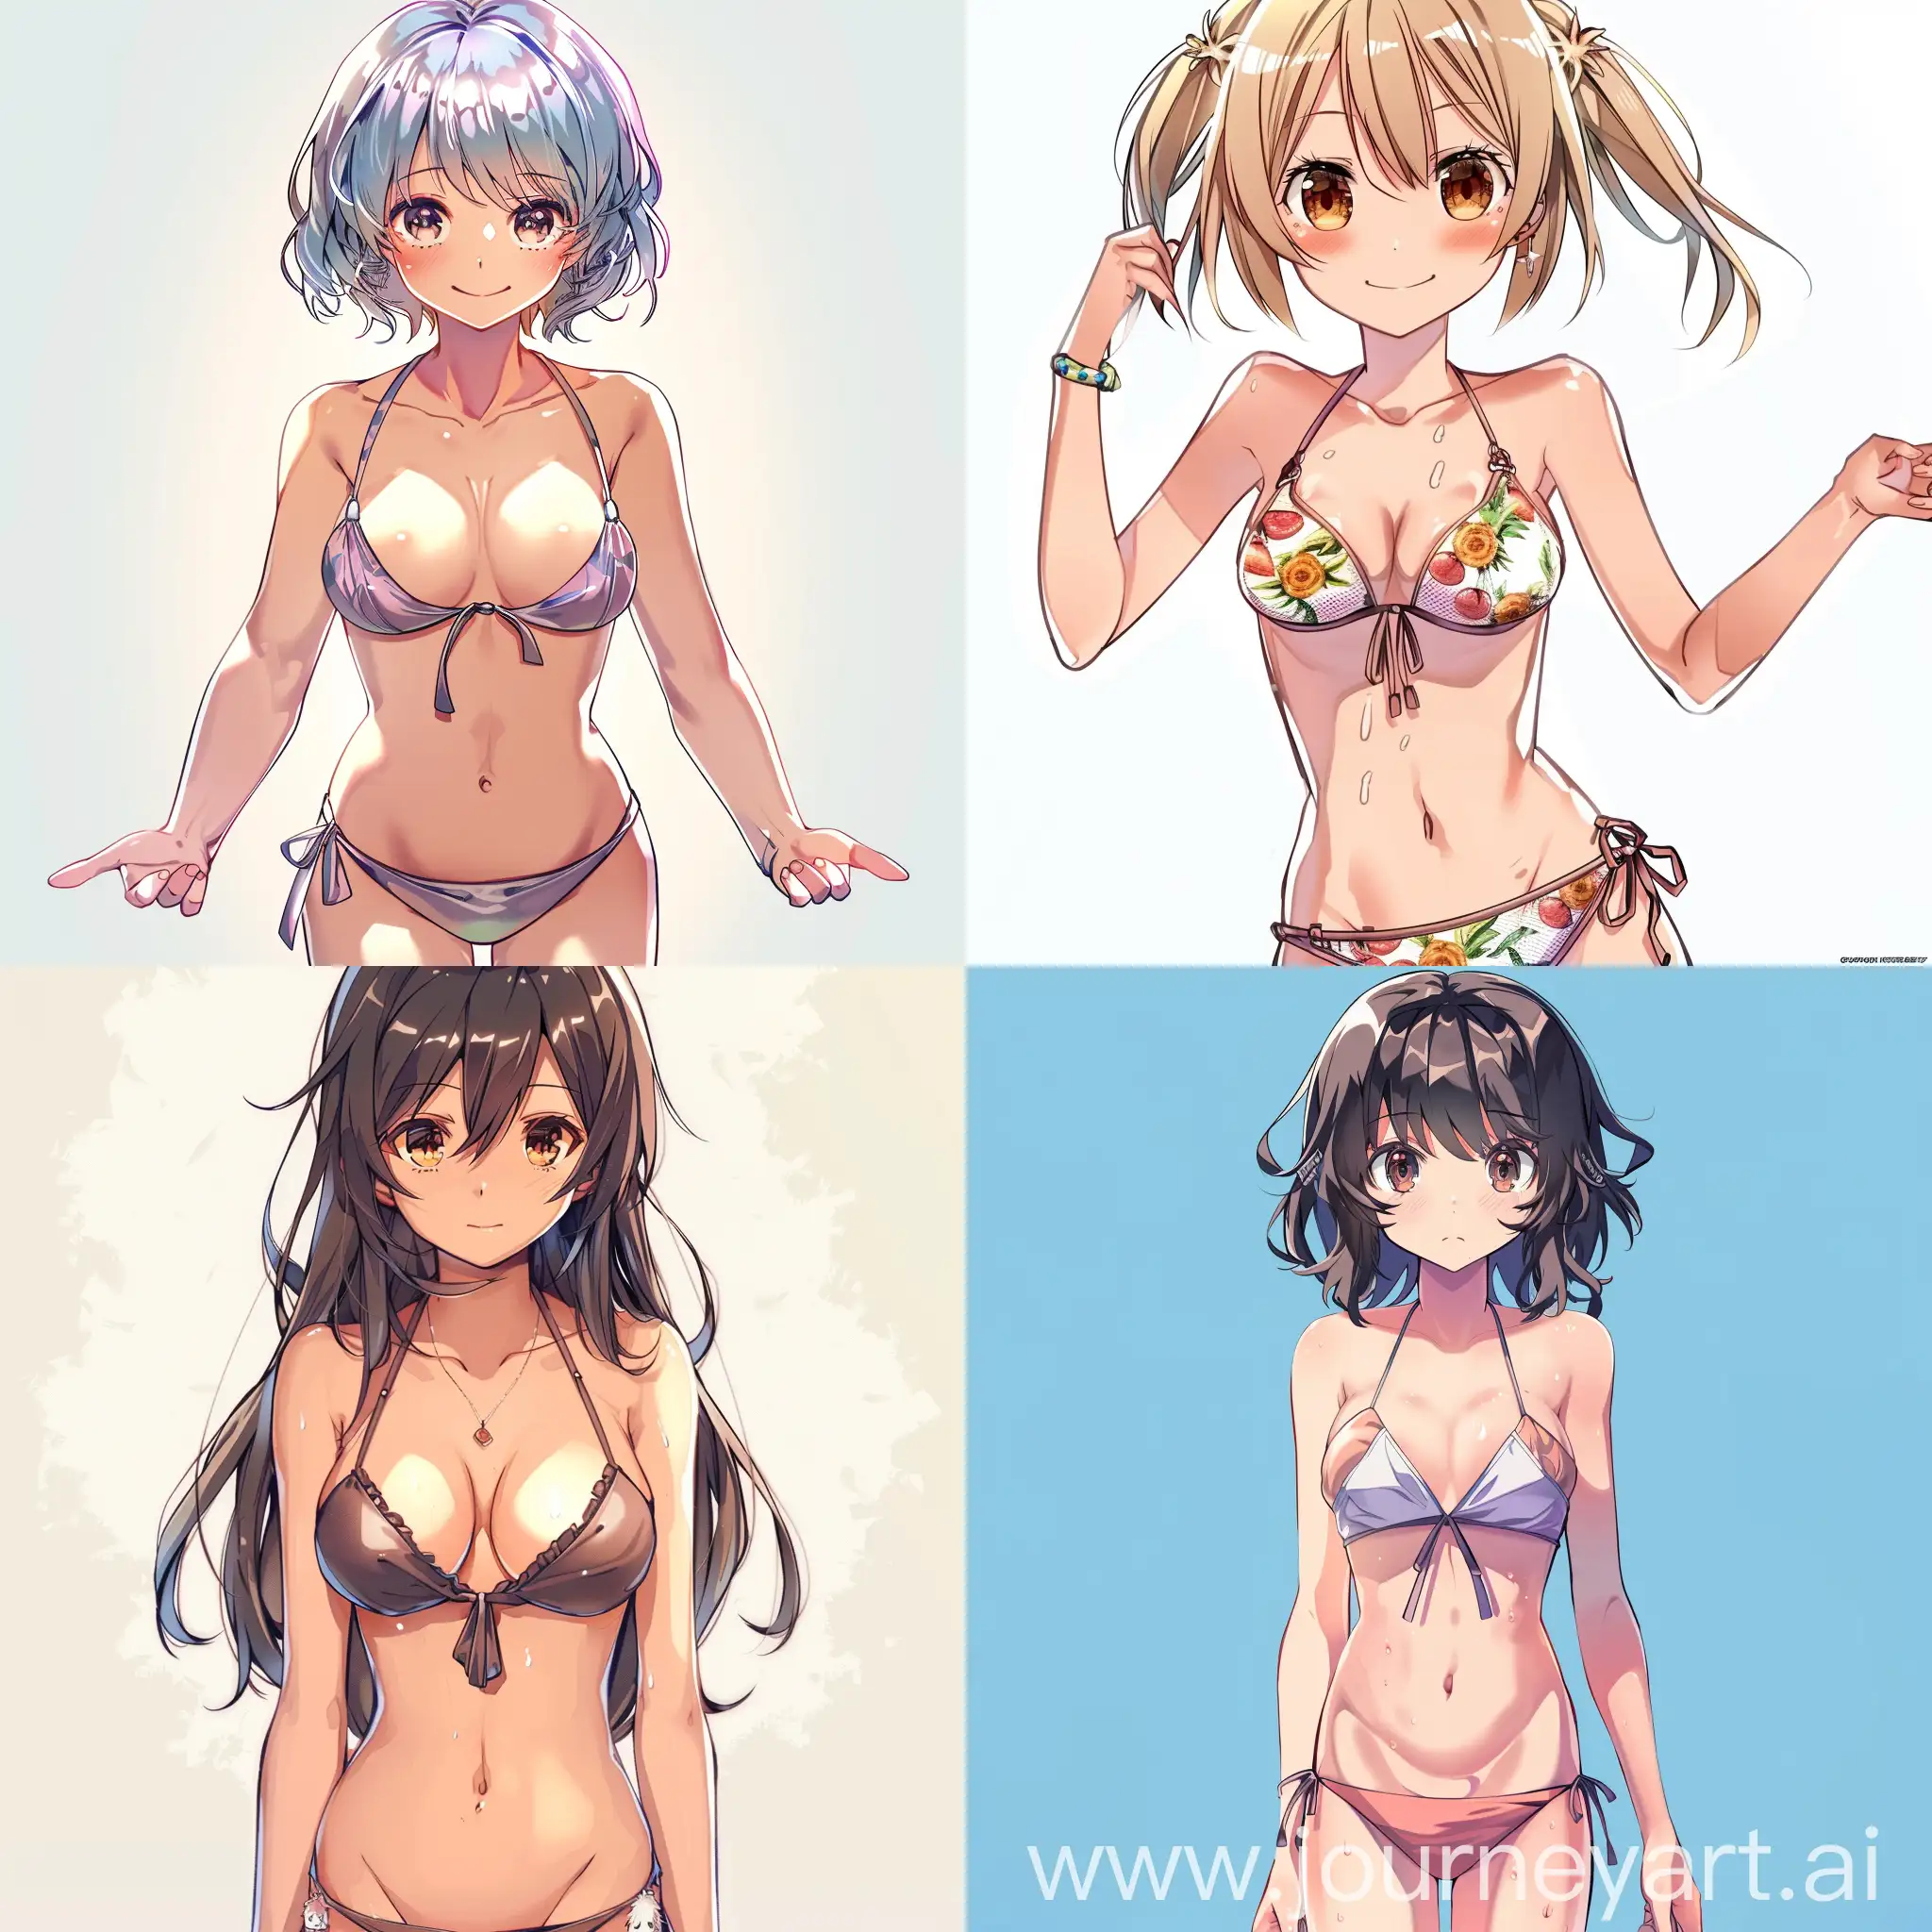 Adorable-Anime-Girl-in-Bikini-Cute-and-Playful-Beach-Fashion